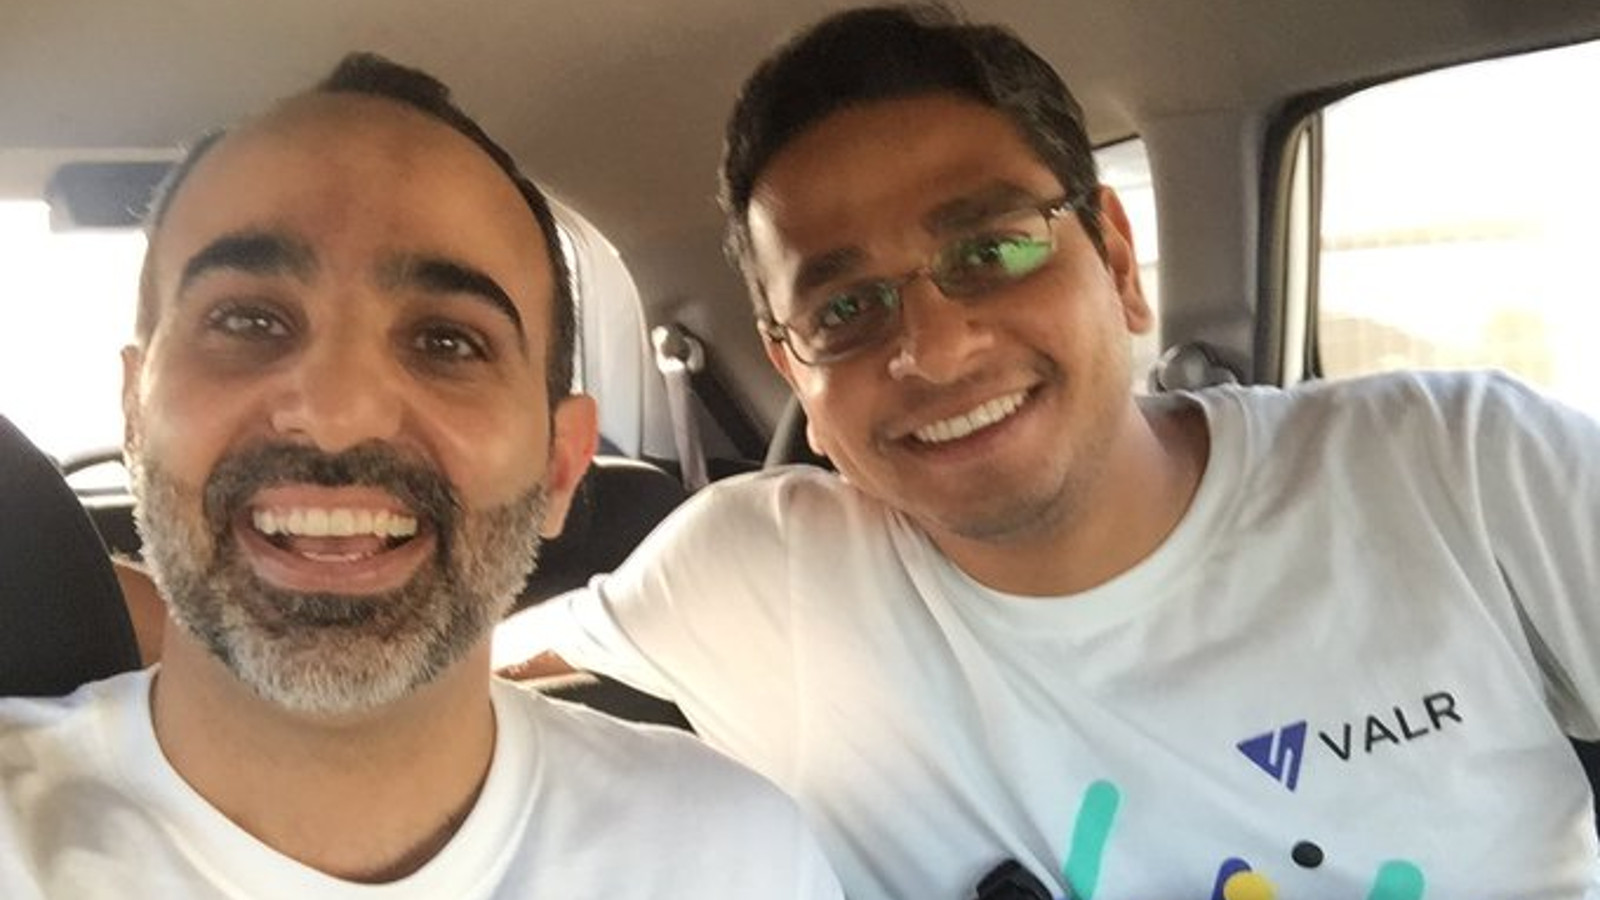 Featured image, left to right: VALR co-founders CEO Farzam Ehsani and CPO Badi Sudhakaran (VALR via Twitter)